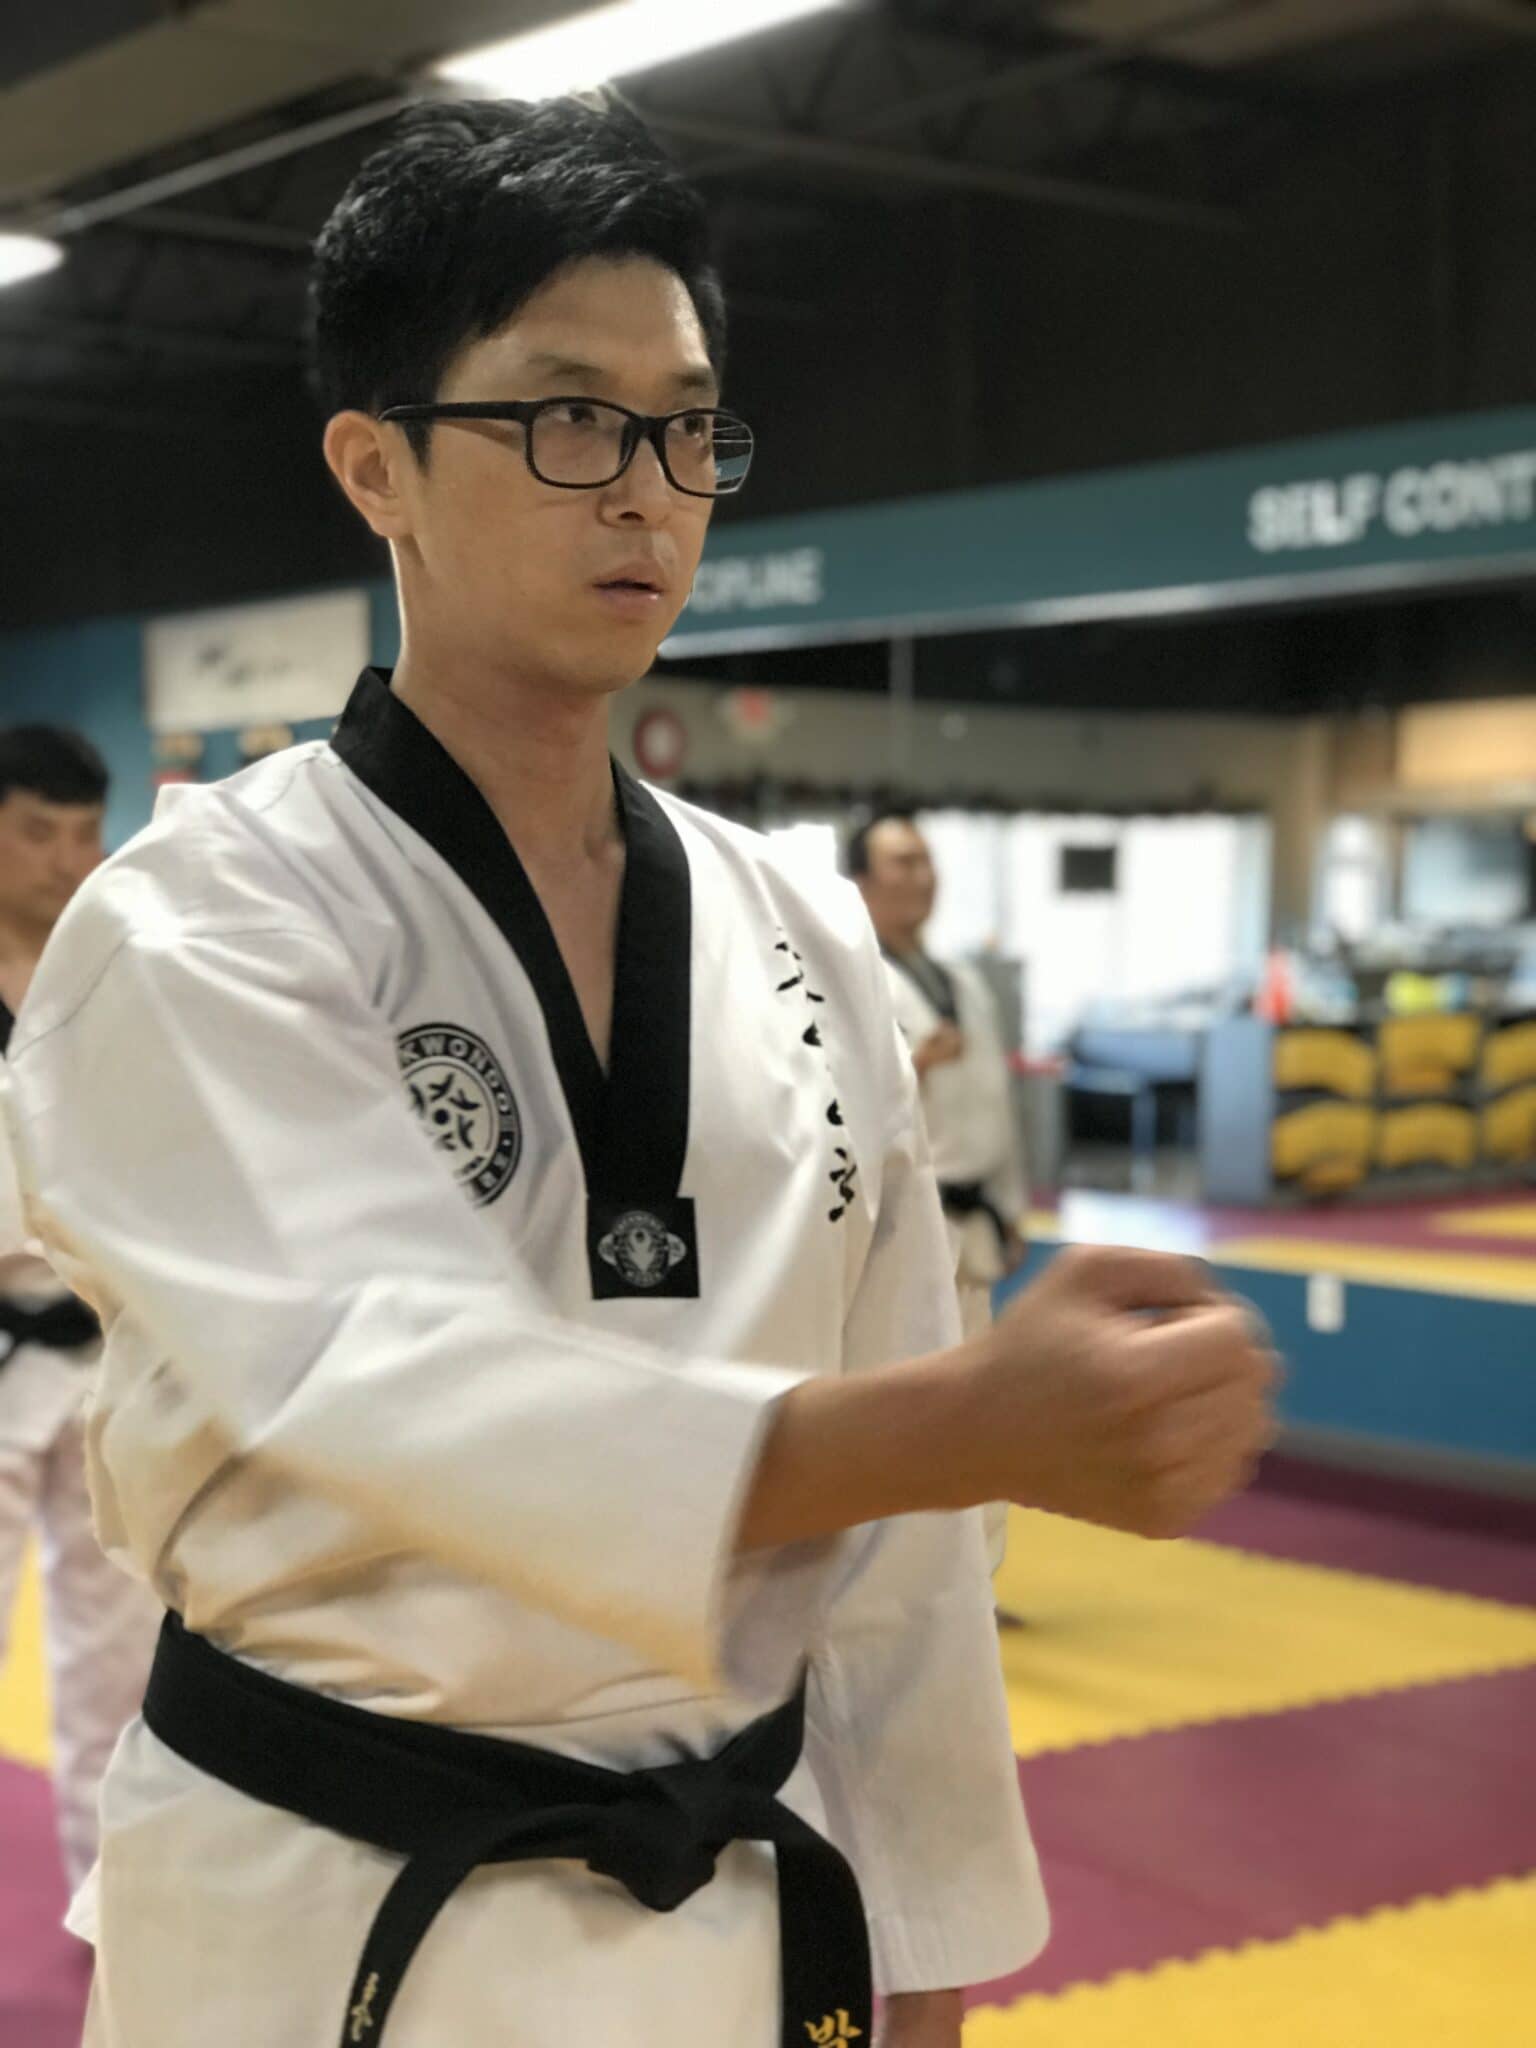 Ahn's Taekwondo Lawrenceville Gallery Photo Number 5